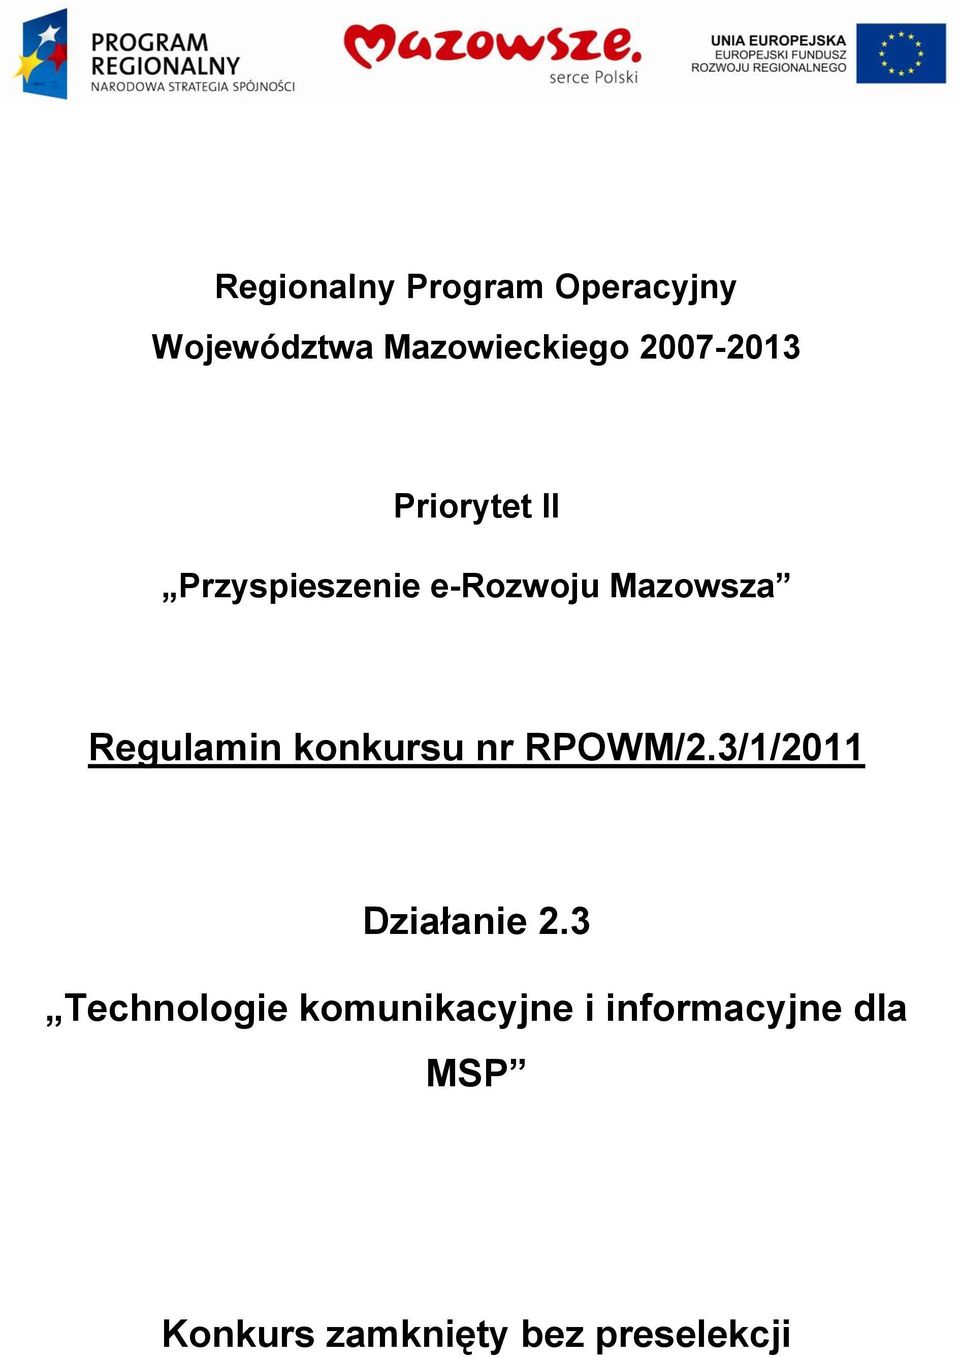 Regulamin konkursu nr RPOWM/2.3/1/2011 Działanie 2.